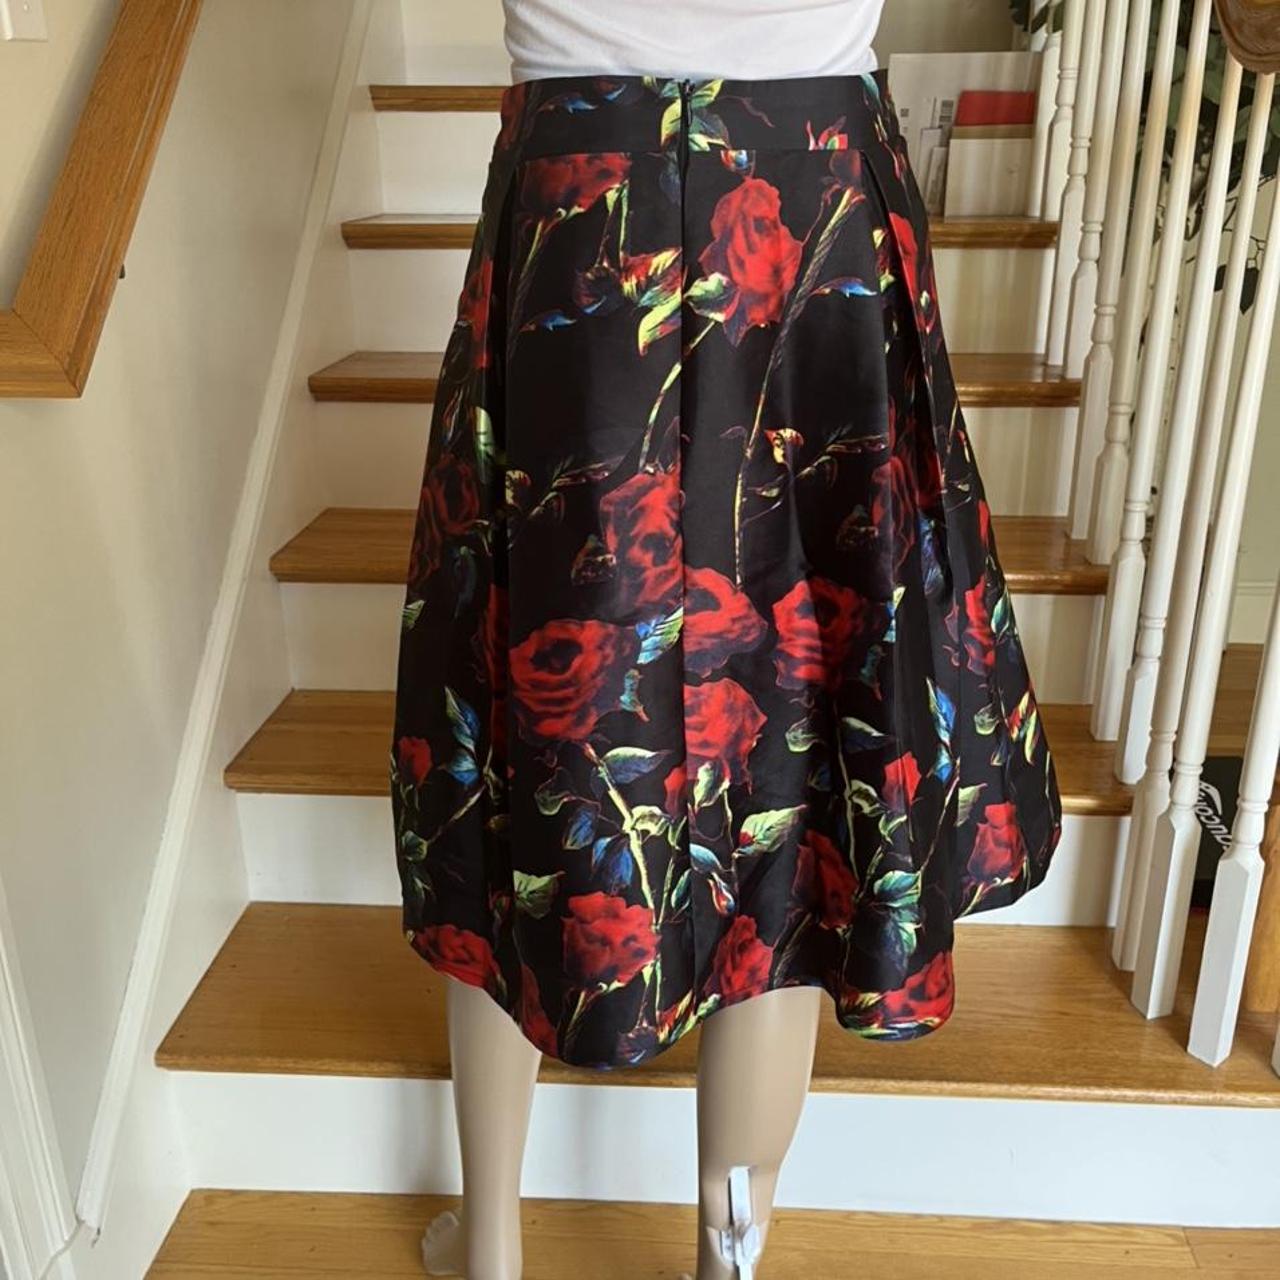 Product Image 2 - Apricot womens skirt
US size 10